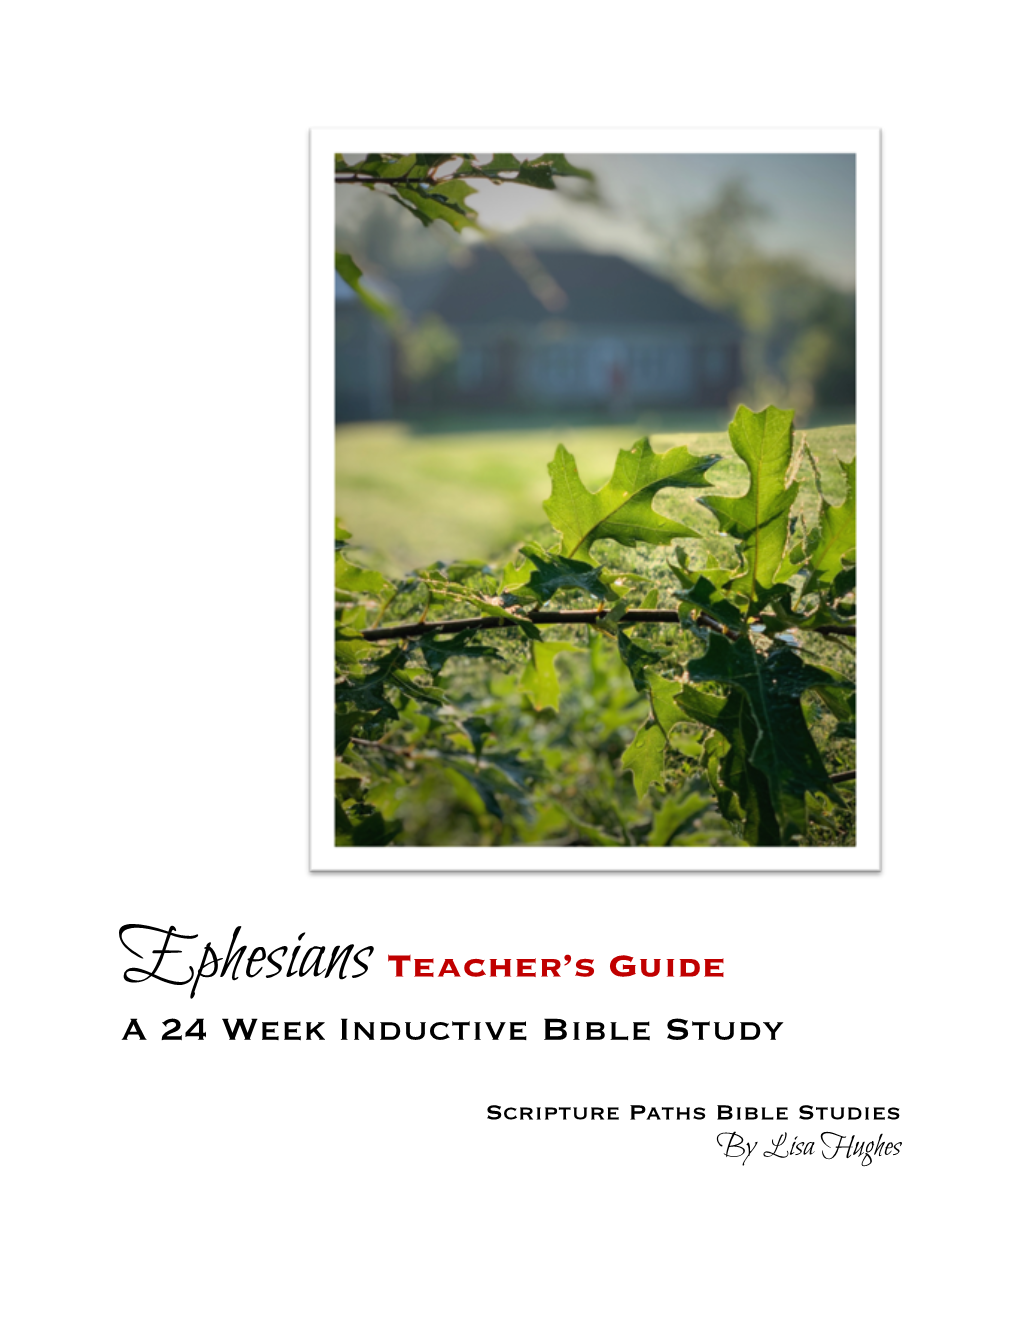 Ephesians Teacher's Guide a 24 Week Inductive Bible Study